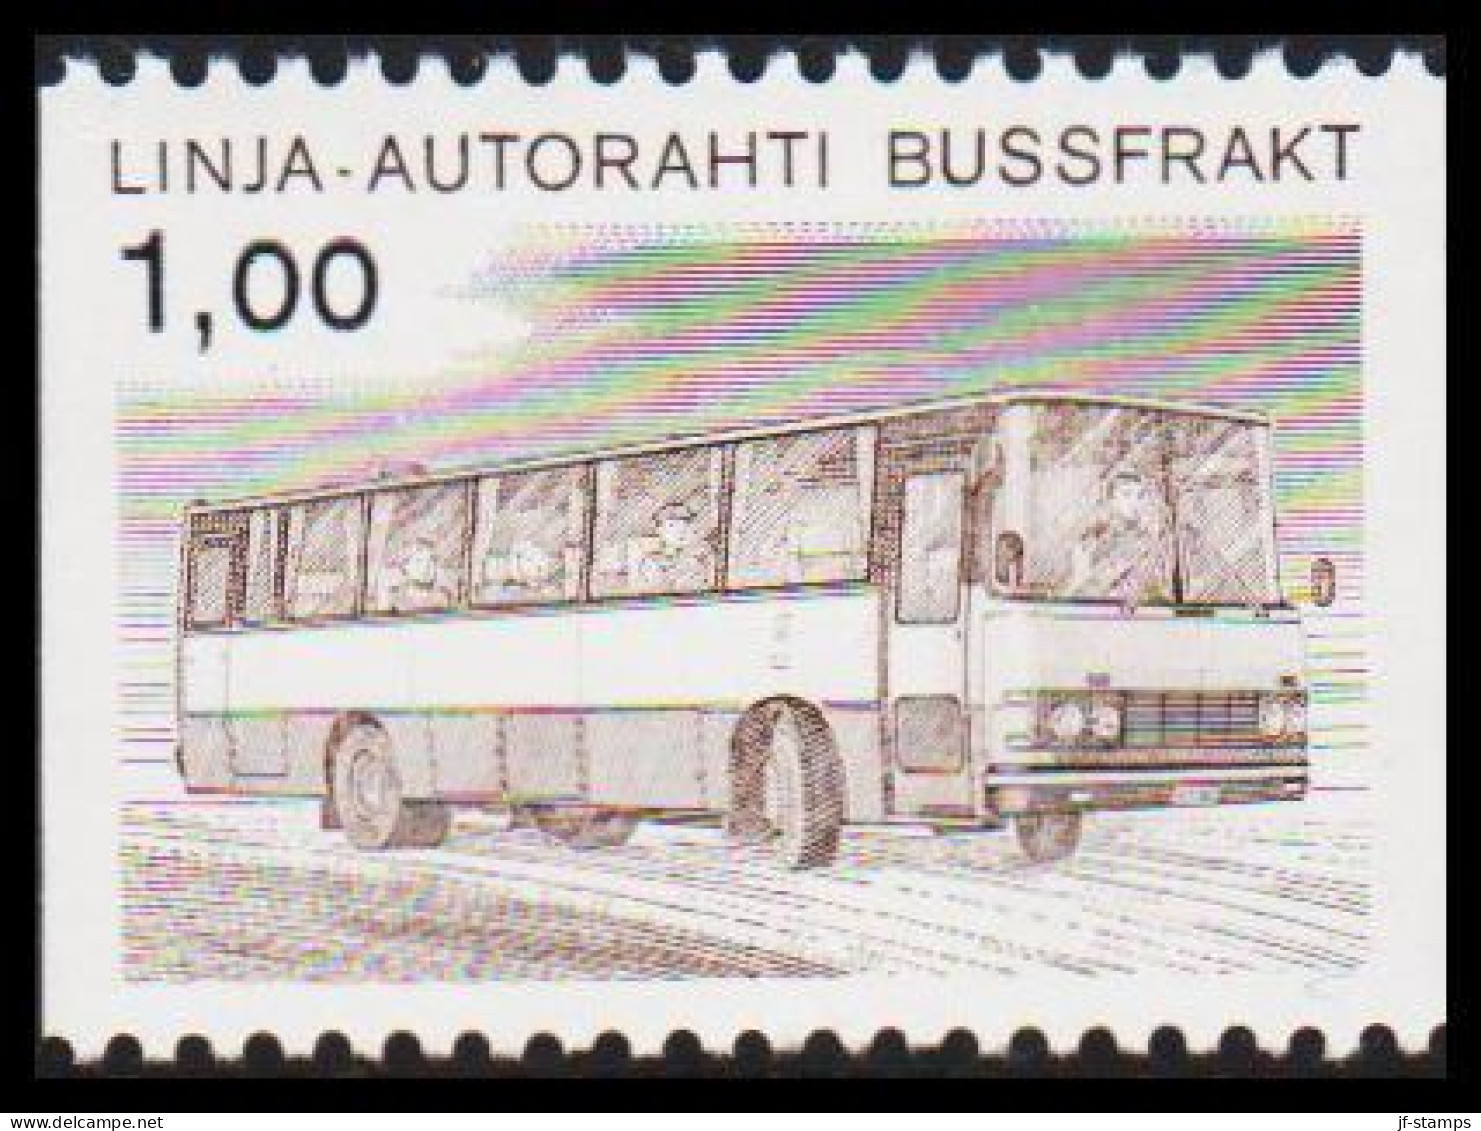 1981. FINLAND. LINJA-AUTORAHTI - BUSSFRAKT. 1,00 Mk. Never Hinged. (Michel 15) - JF535617 - Postbuspakete